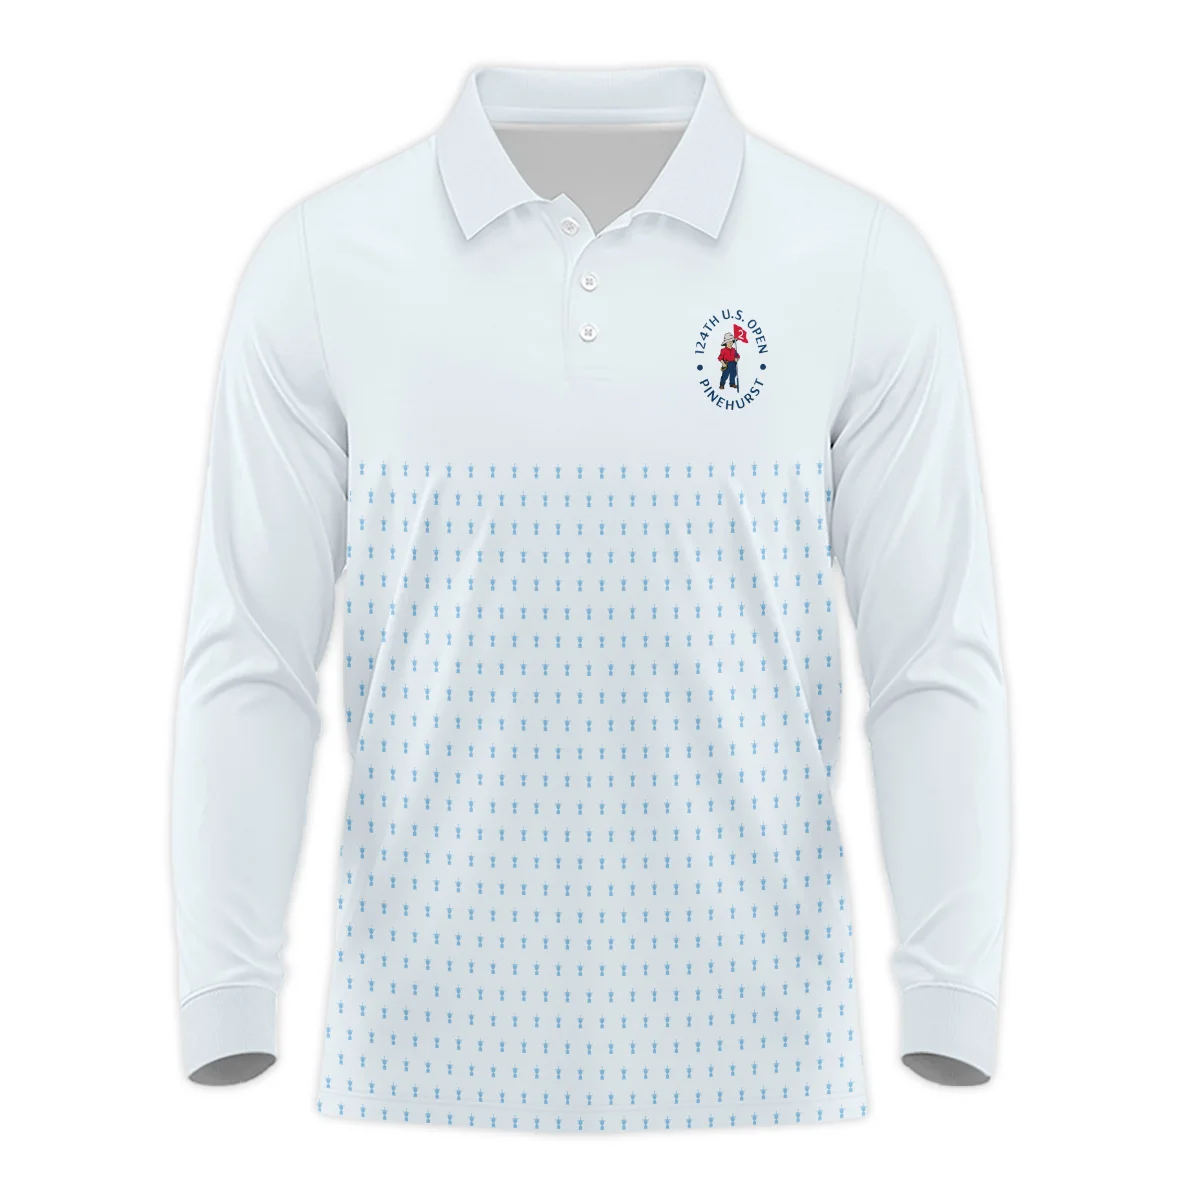 U.S Open Trophy Pattern Light Blue 124th U.S. Open Pinehurst Titleist Unisex T-Shirt Style Classic T-Shirt